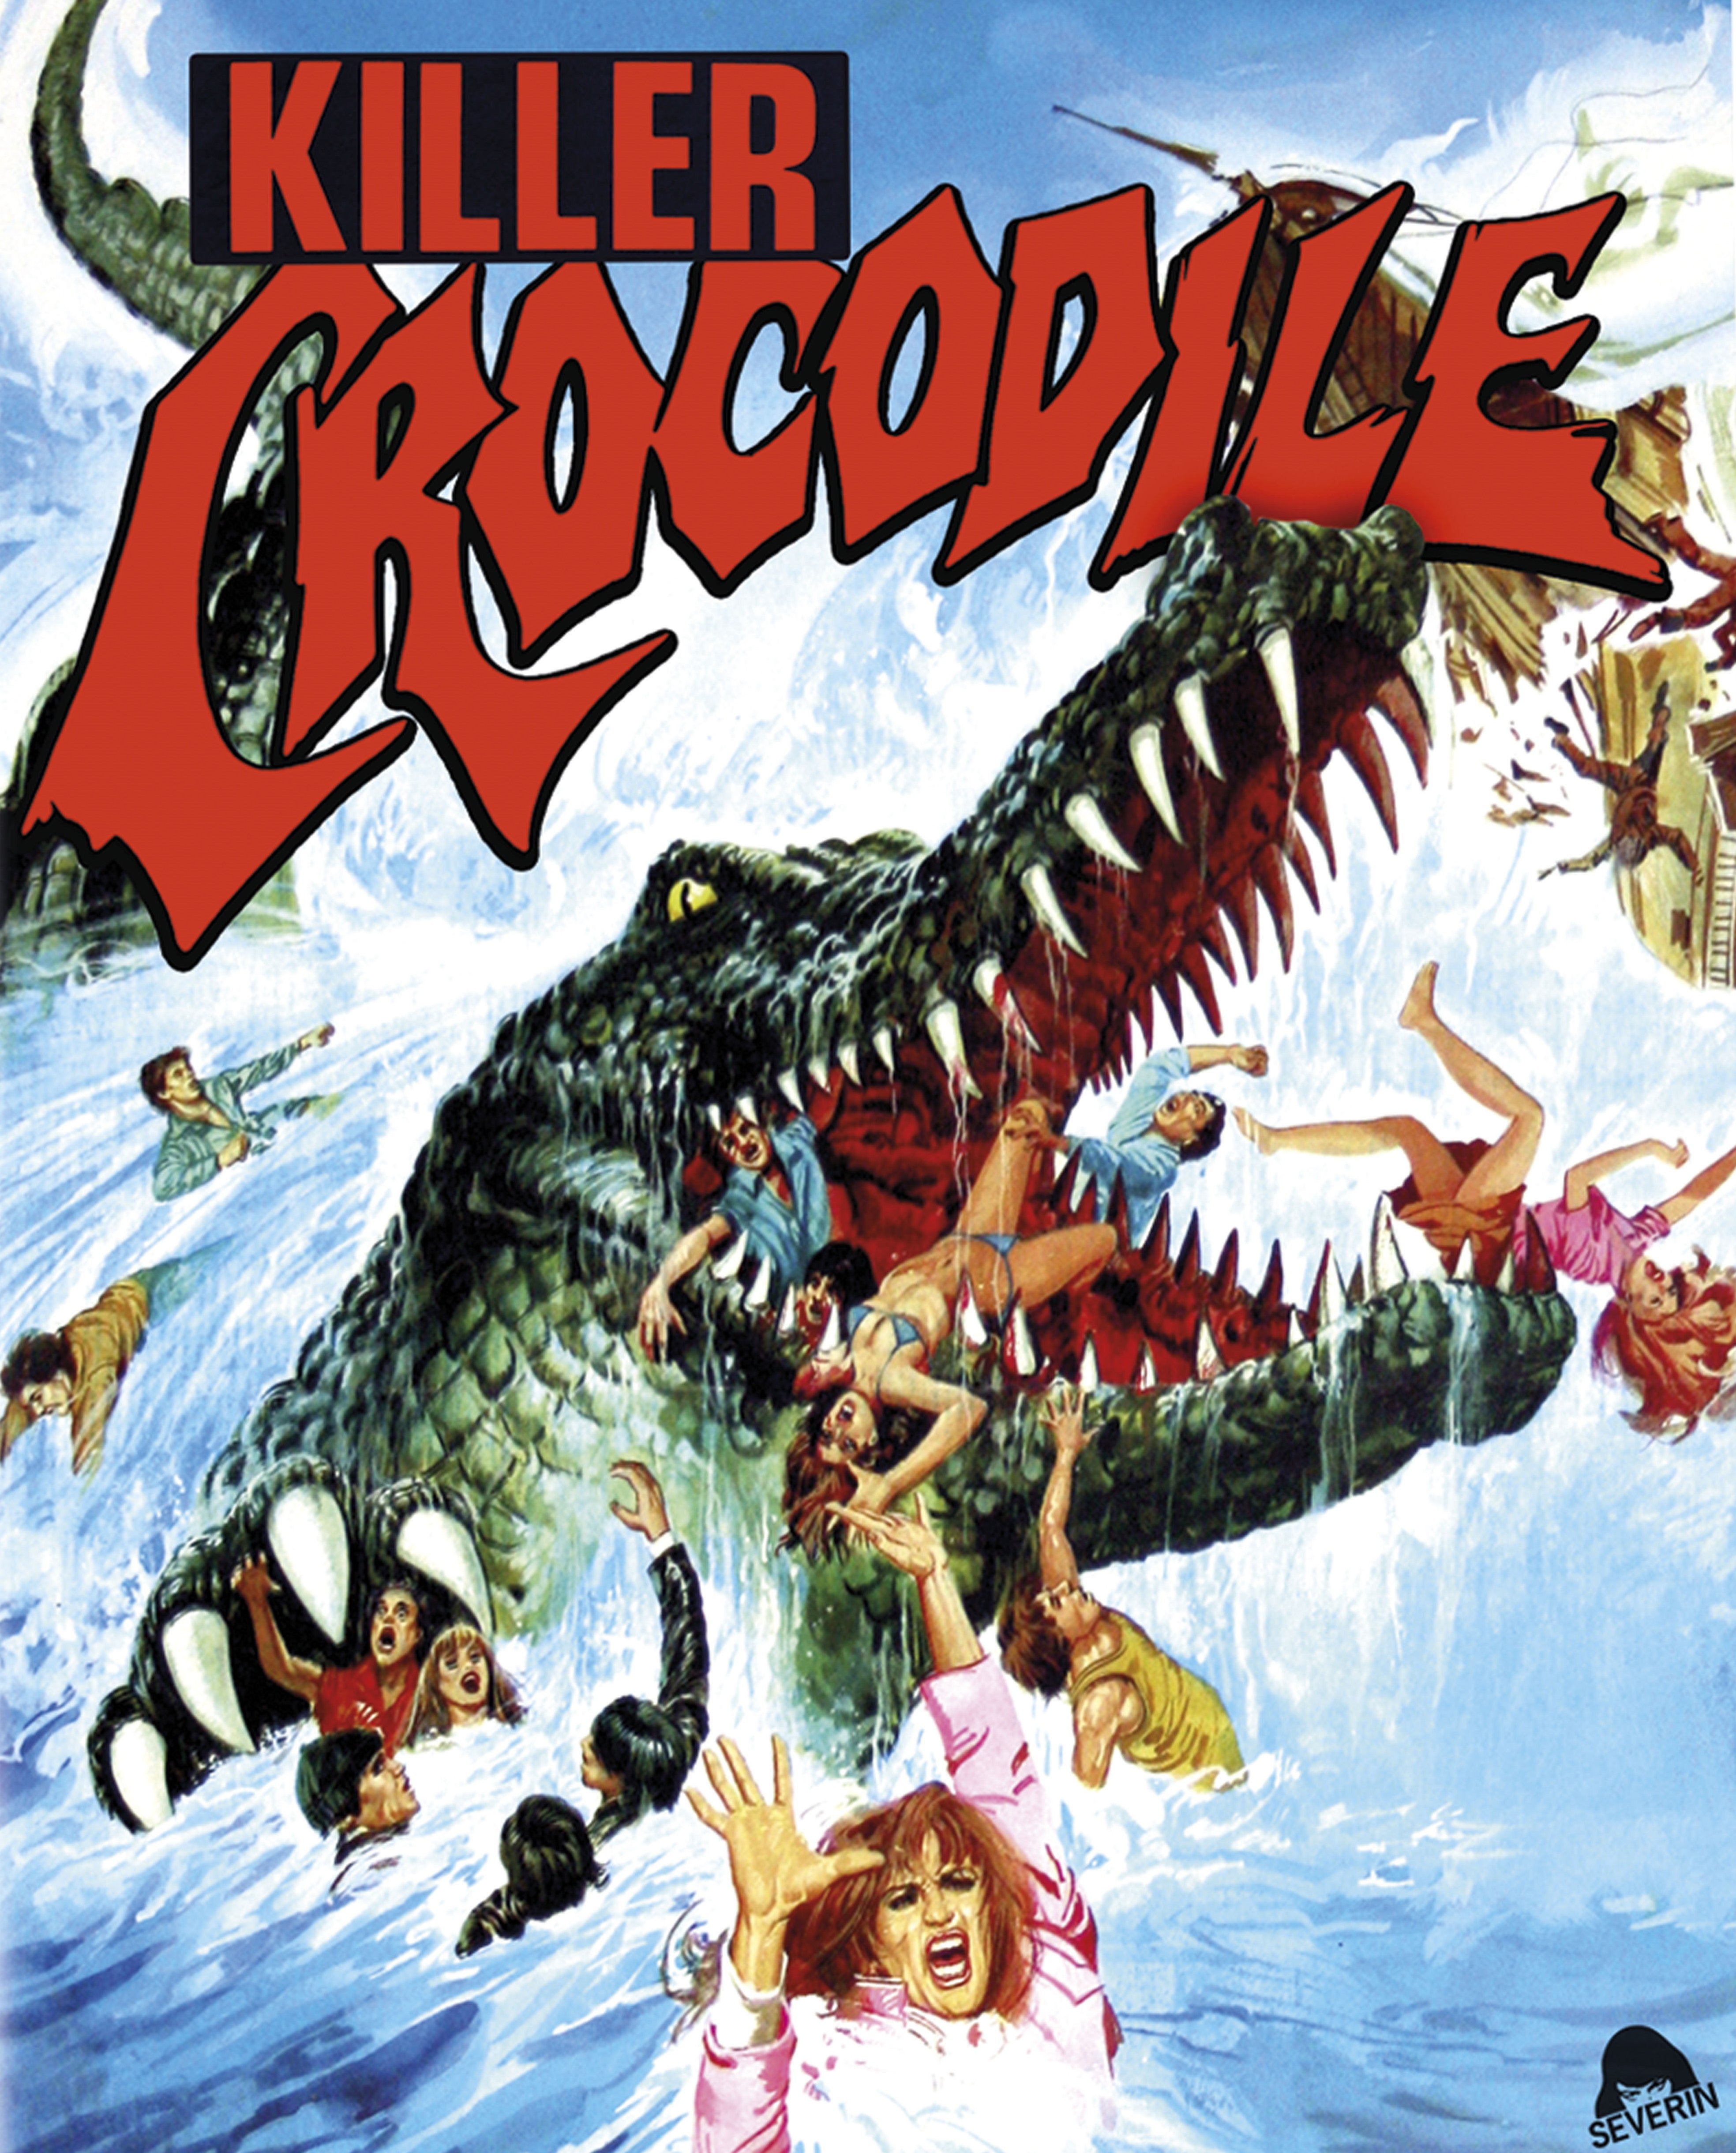 Killer Crocodile (Limited Edition) Blu-Ray Blu-Ray